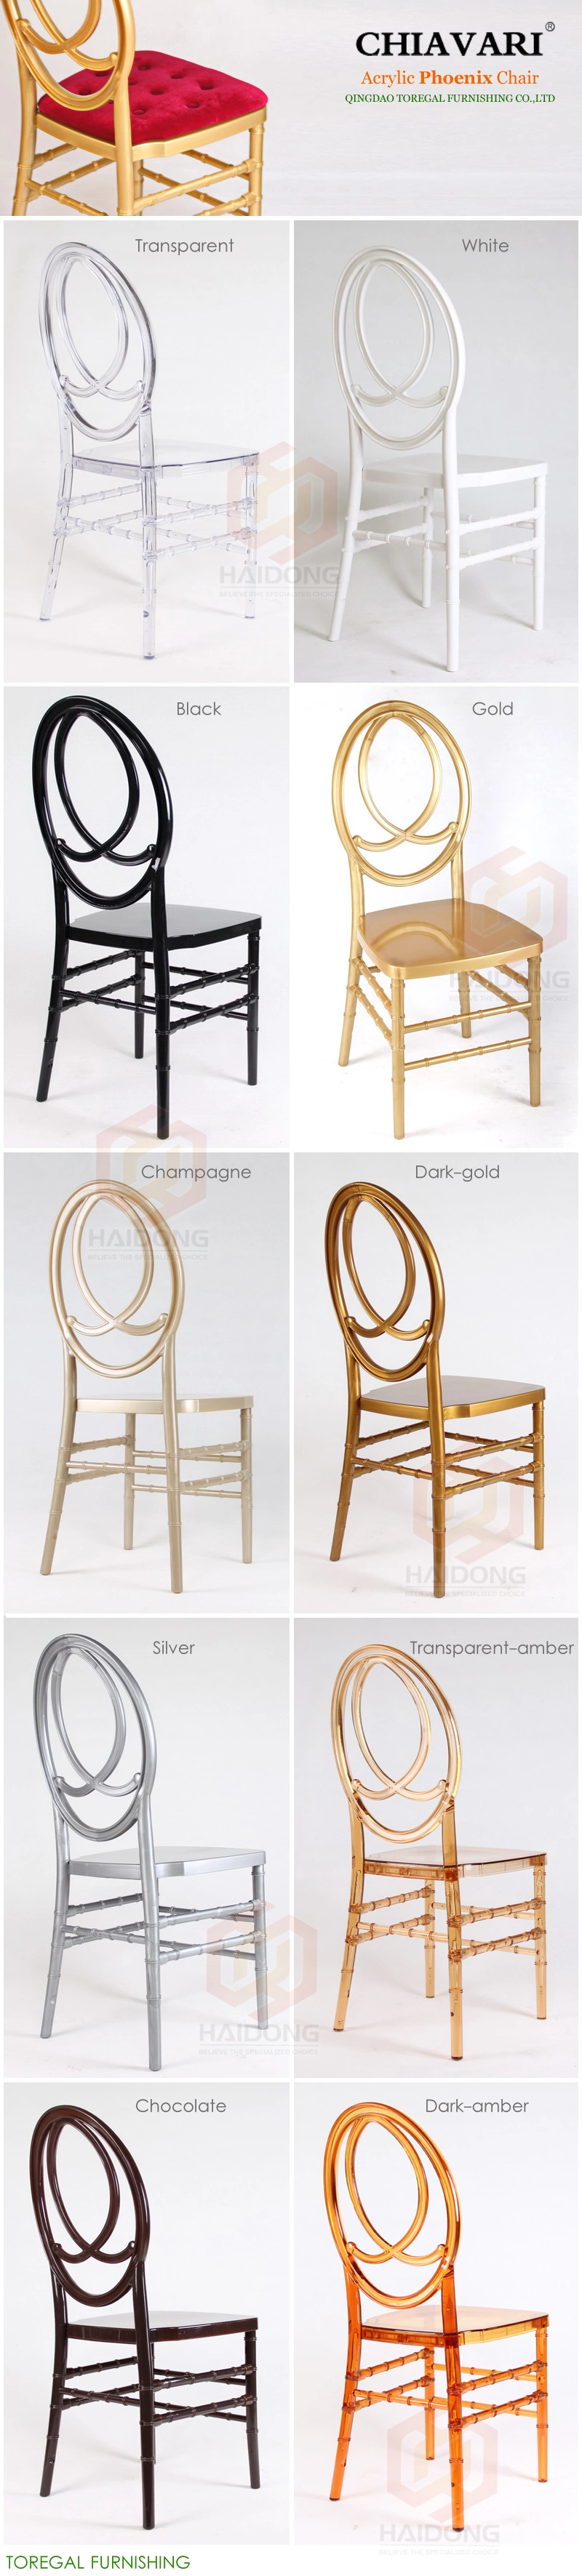 Black Acrylic Resin Chair Phoenix Wedding Chair for Event Rental